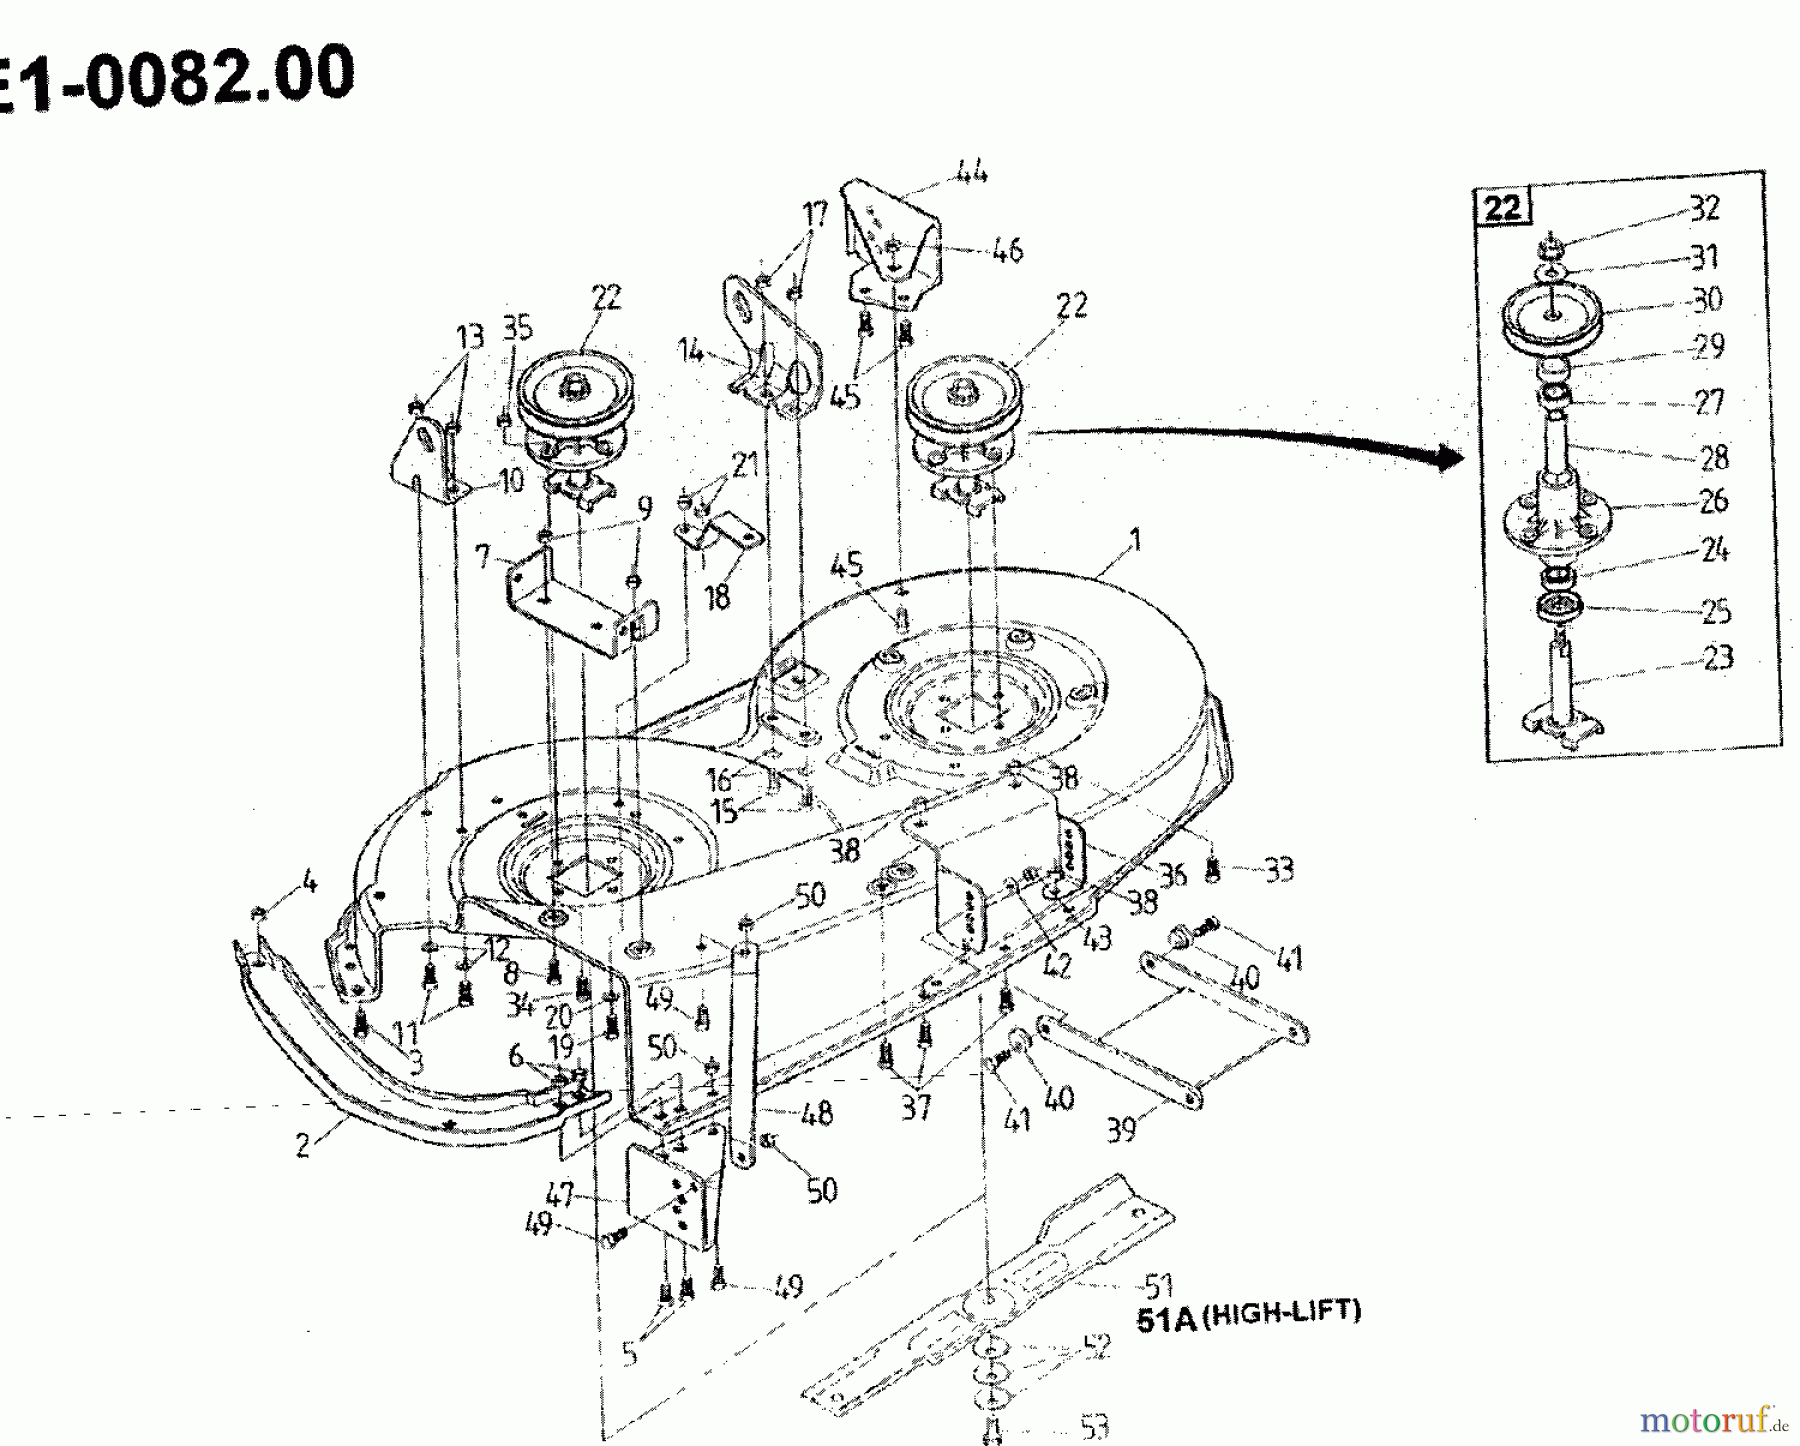  Gutbrod Rasentraktoren 1114 AWS 00097.01  (1992) Mähwerk 110cm